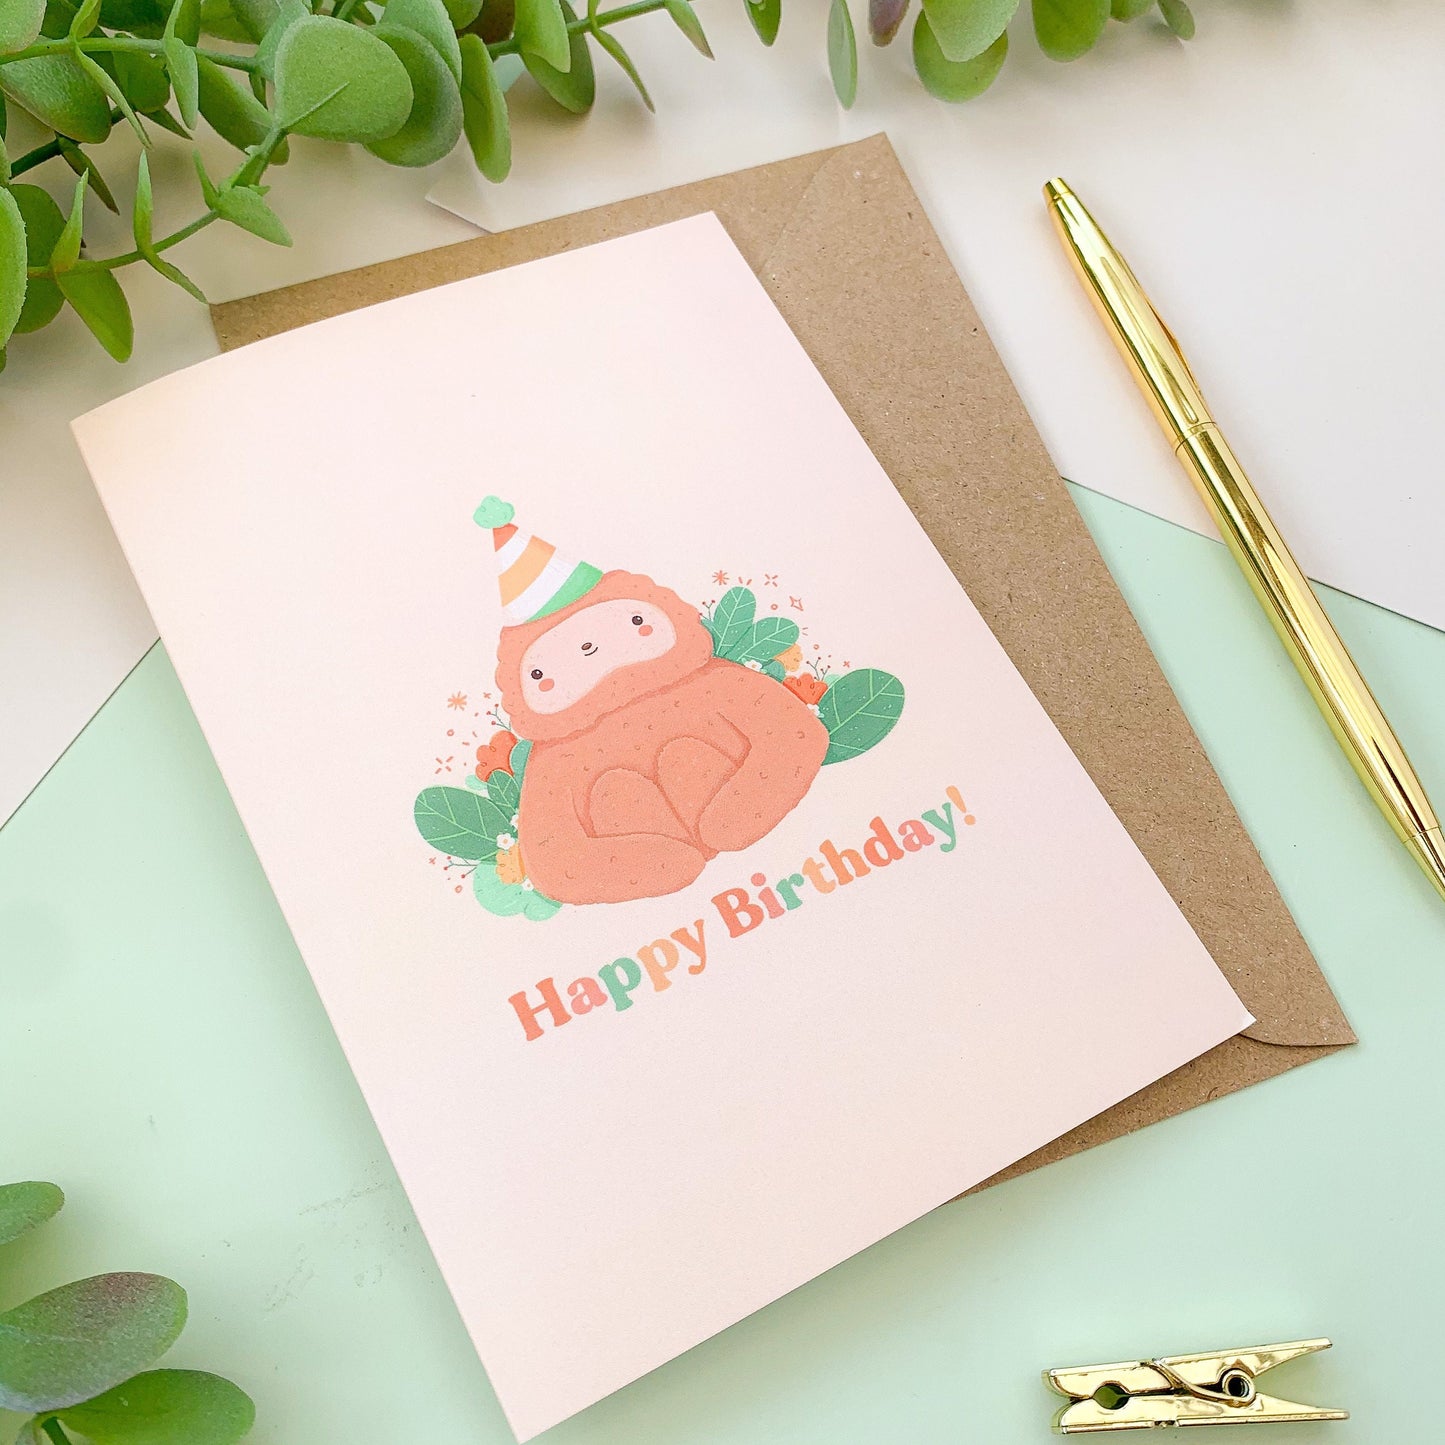 Birthday Sloth - Cute Illustrated Greetings Card